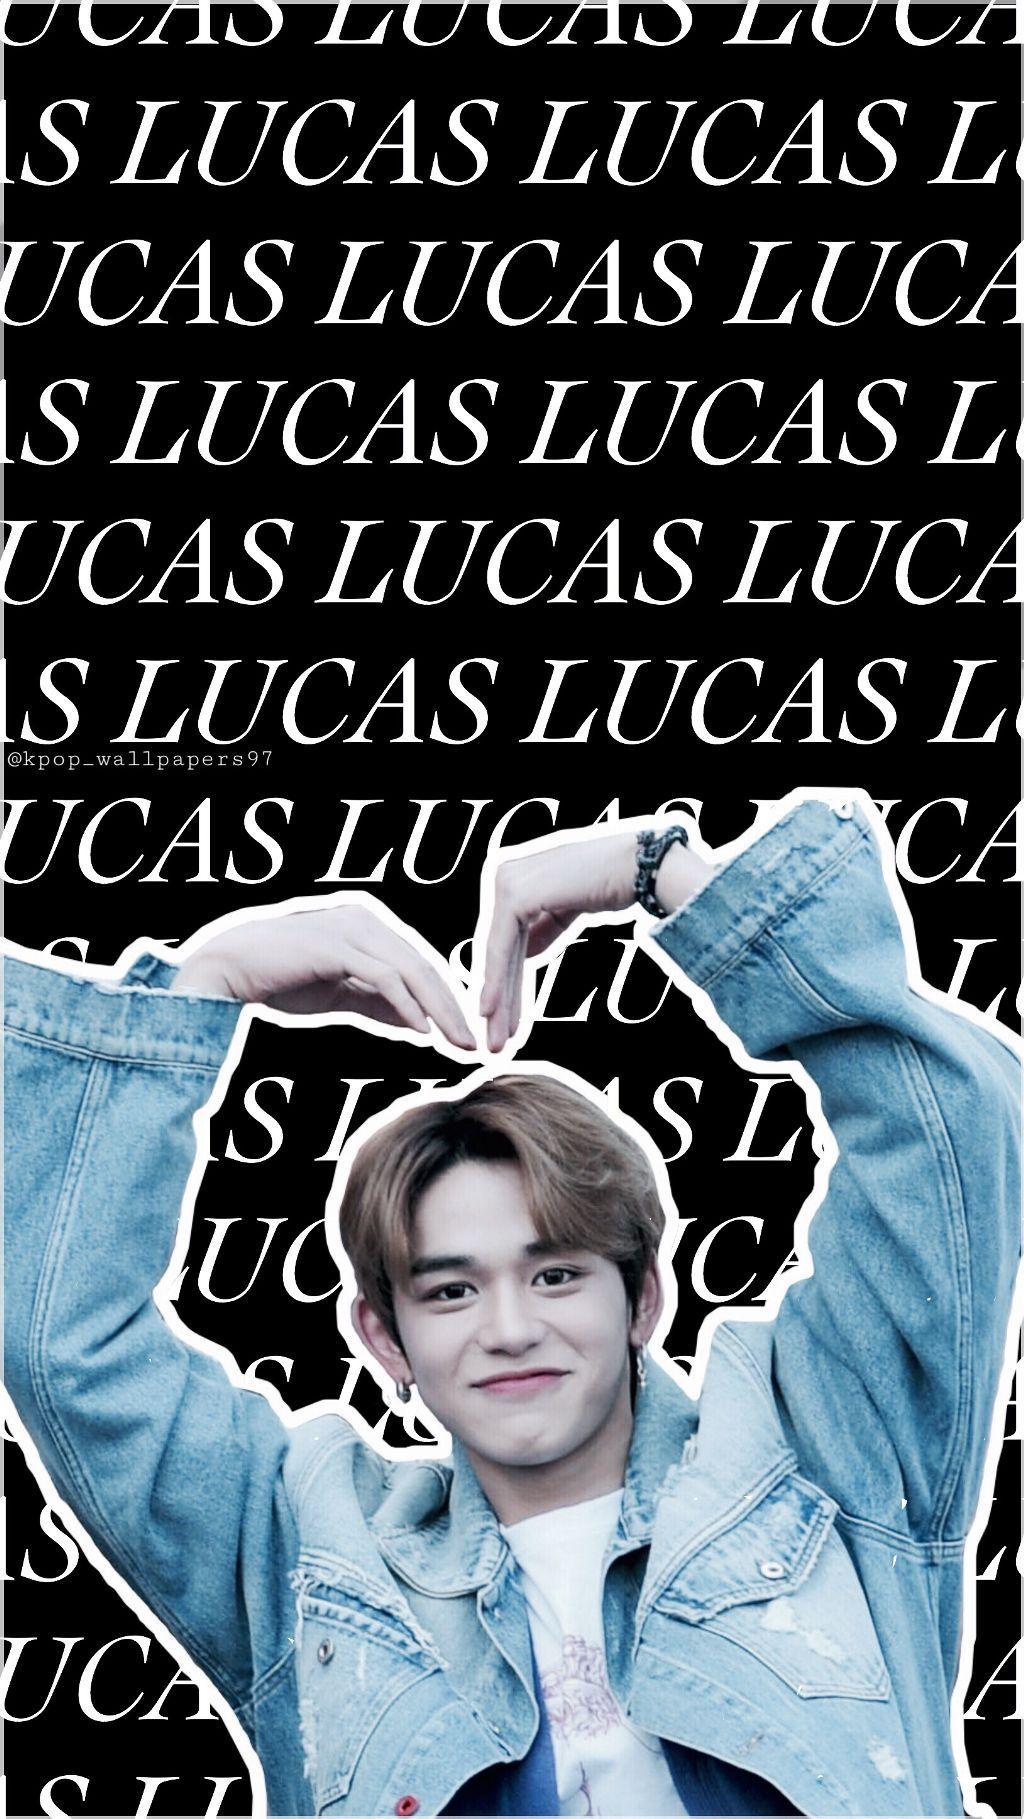 Lucas - lucasnct lucasnctu lucaswallpap